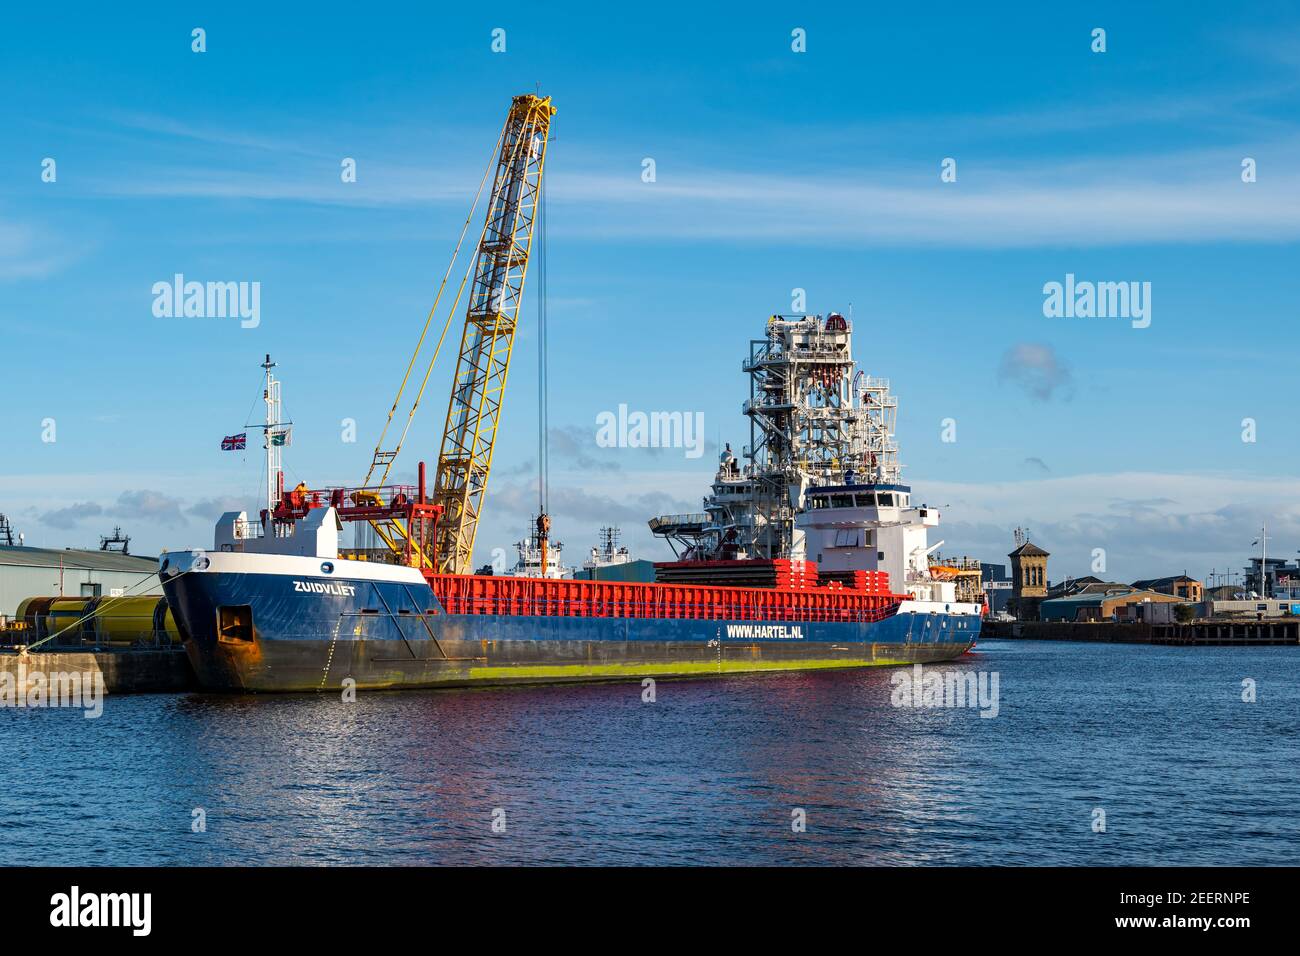 Dutch cargo ship Zuidvliet, Hartel Netherlands shipping company unloading at dock, Leith harbour, Edinburgh, Scotland, UK Stock Photo